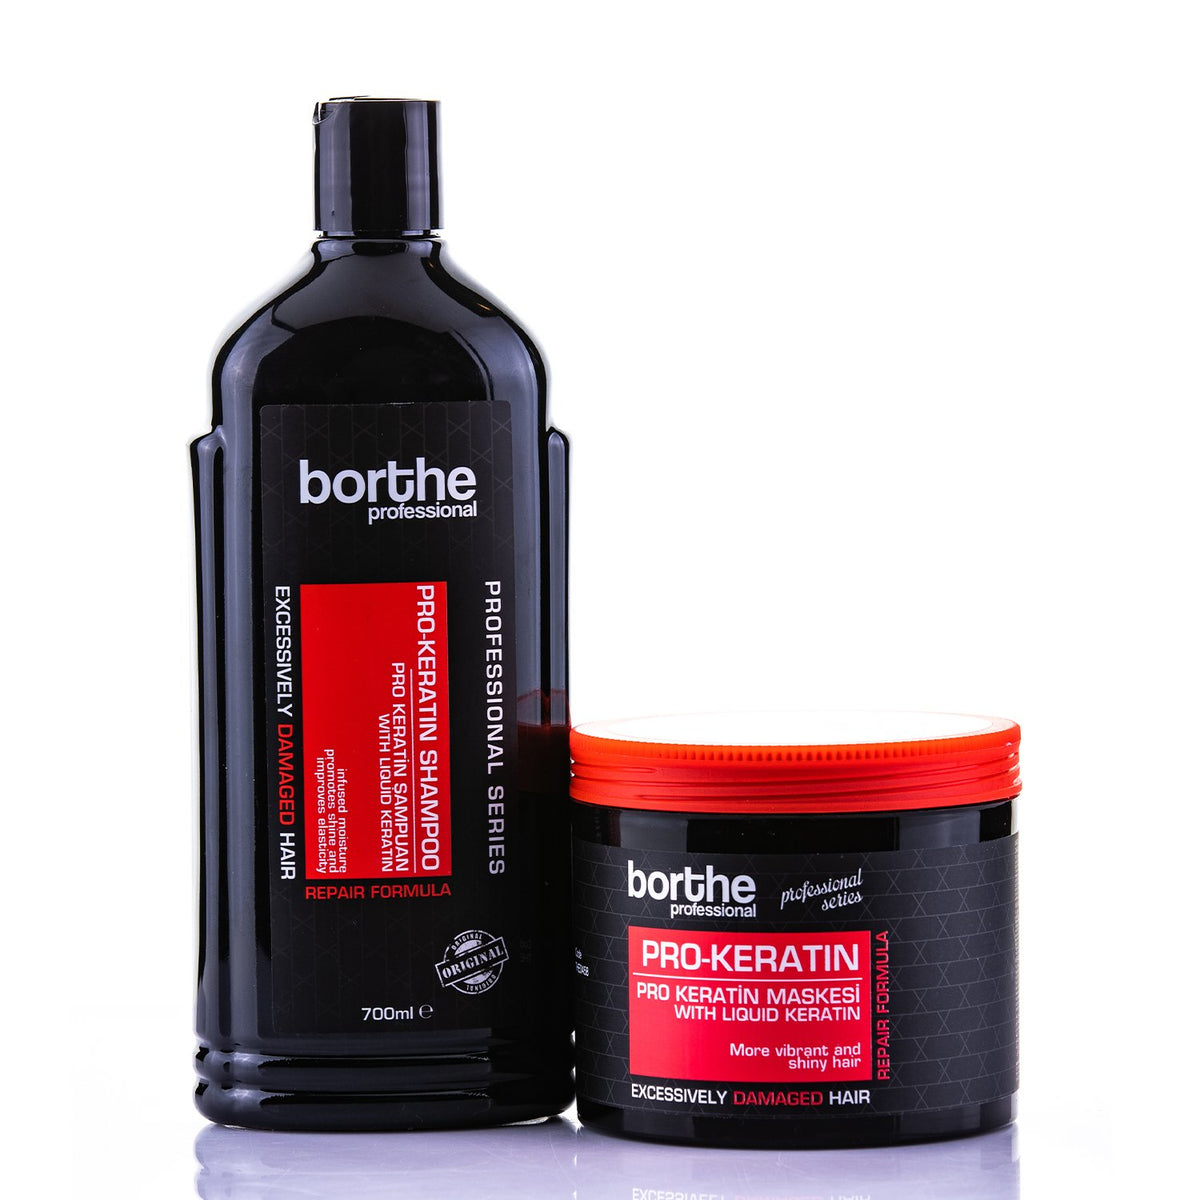 BORTHE Pro-Keratin Shampoo 700ml